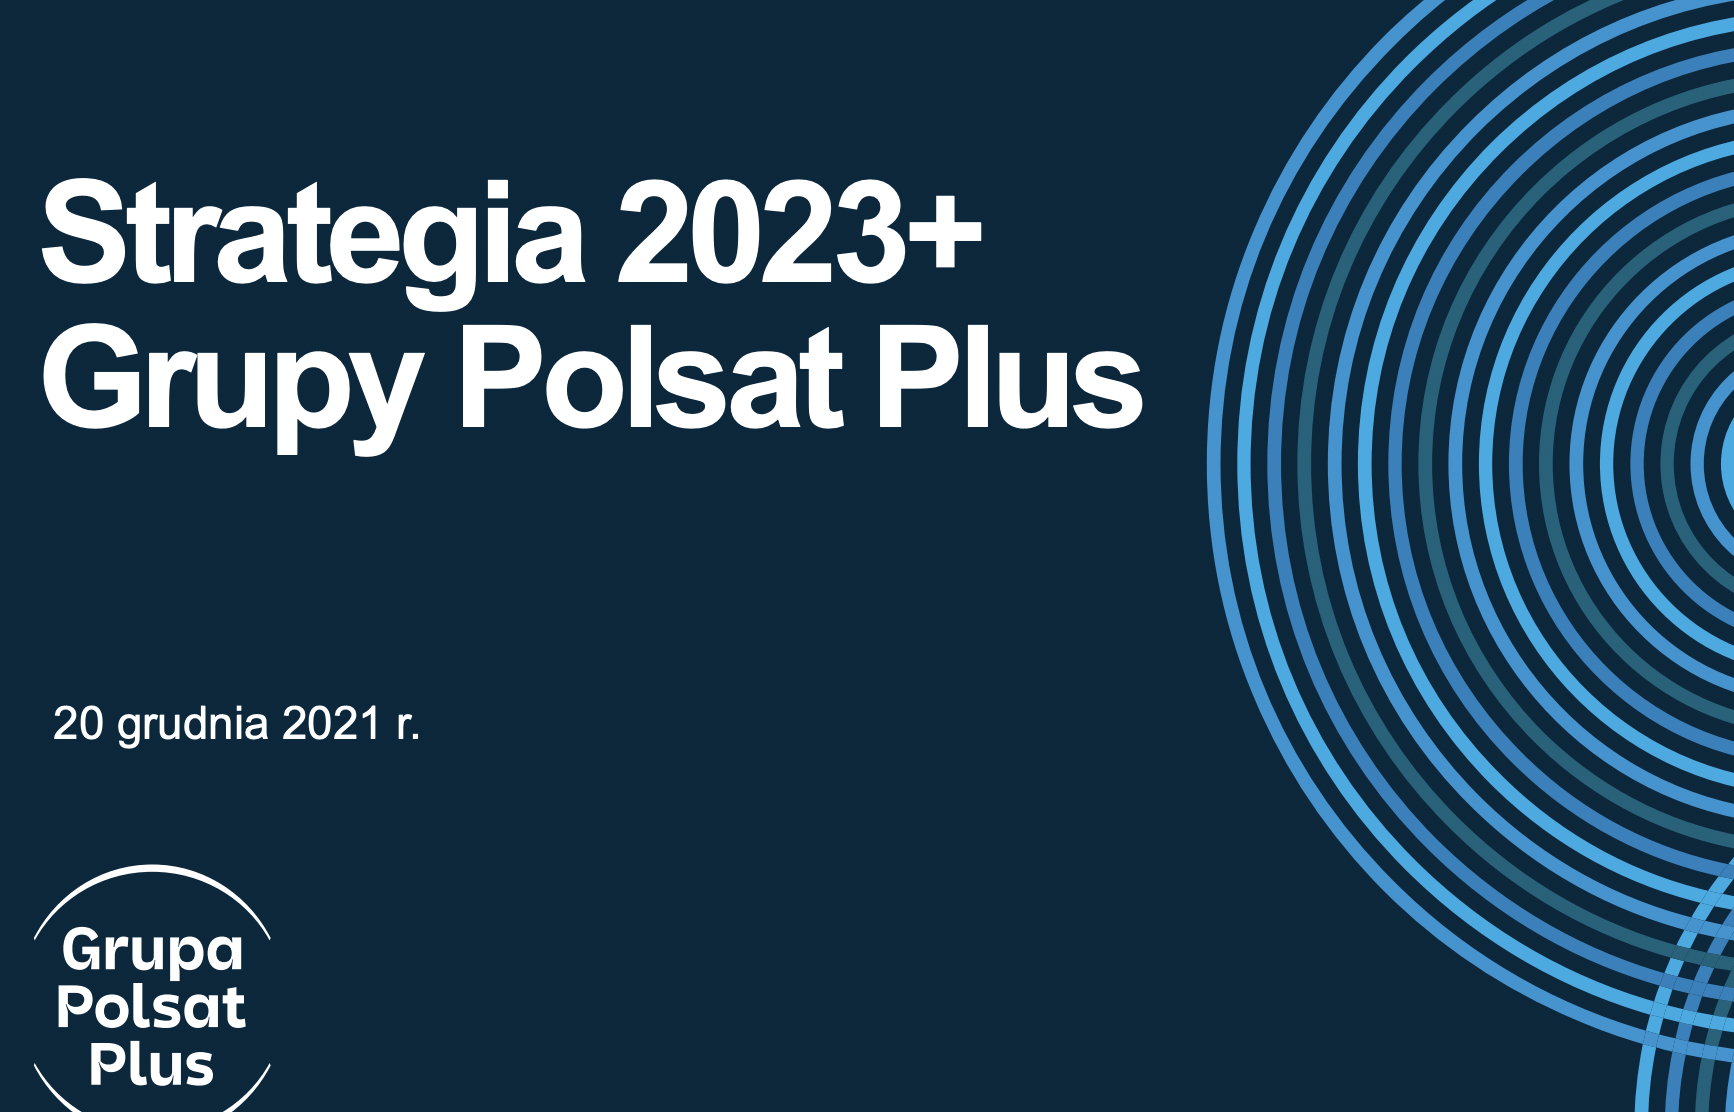 Strategia 2023+ Grupy Polsat Plus